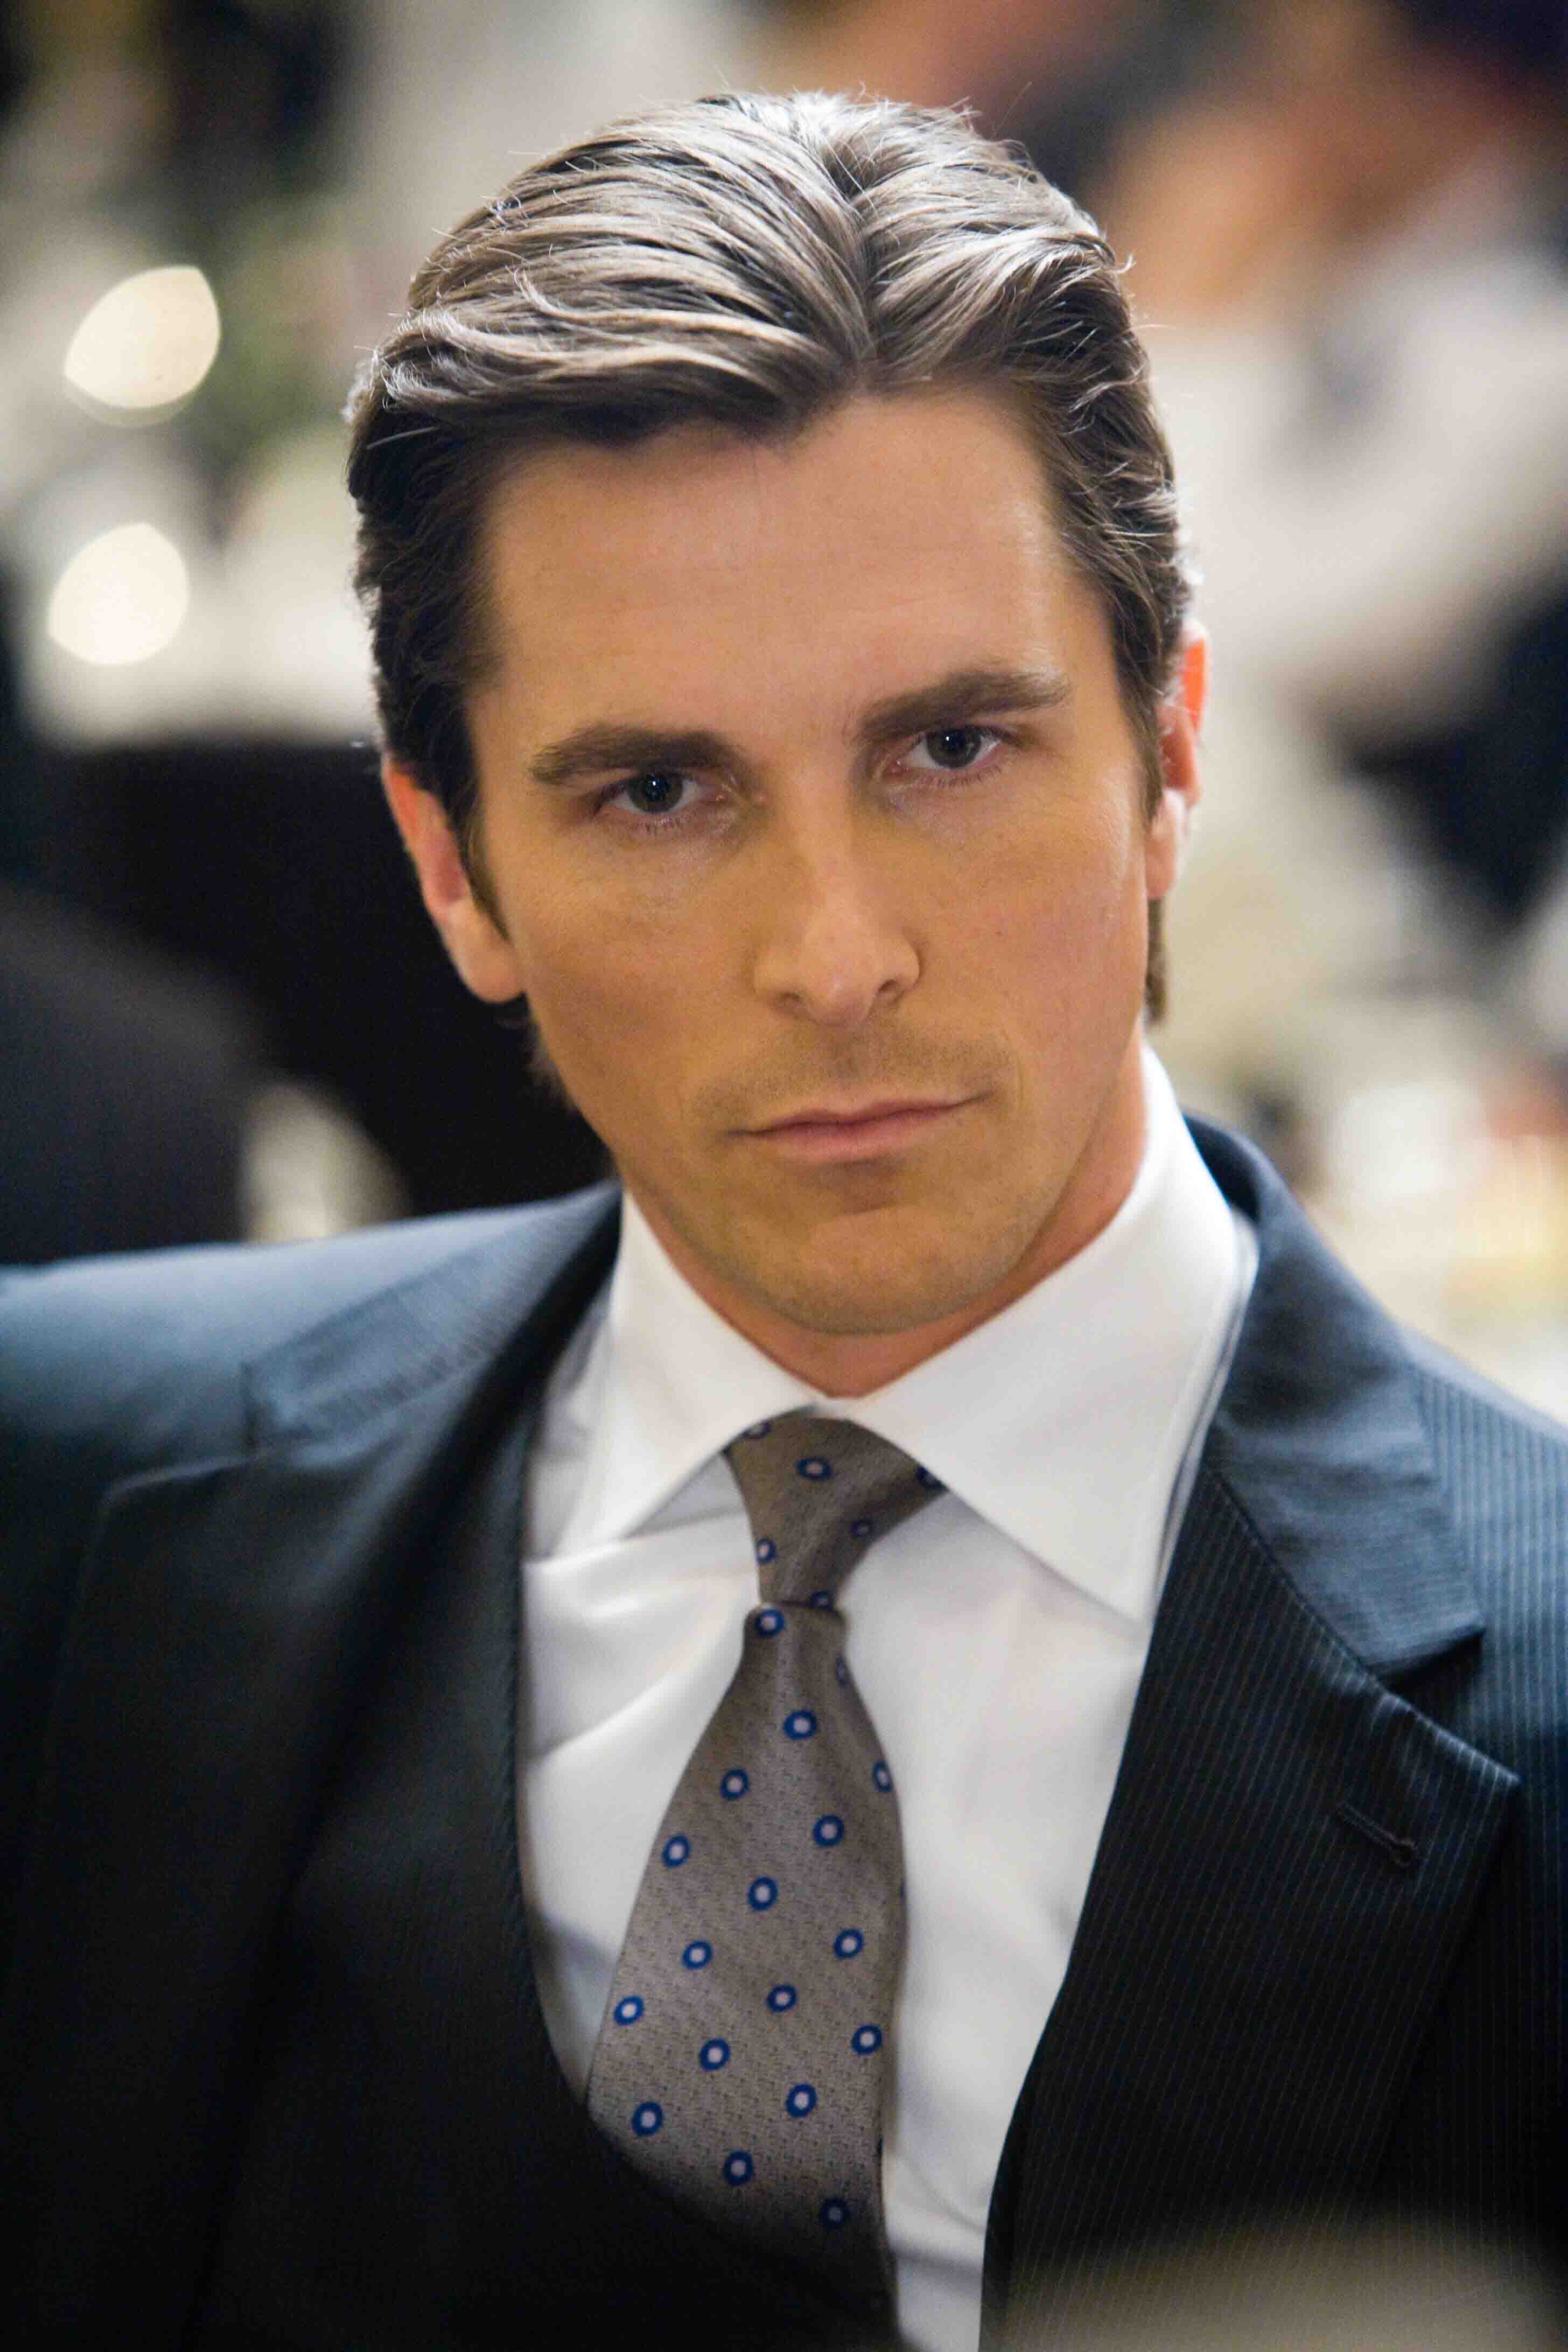 Christian Bale Latest HD Wallpaper Free Download. New HD